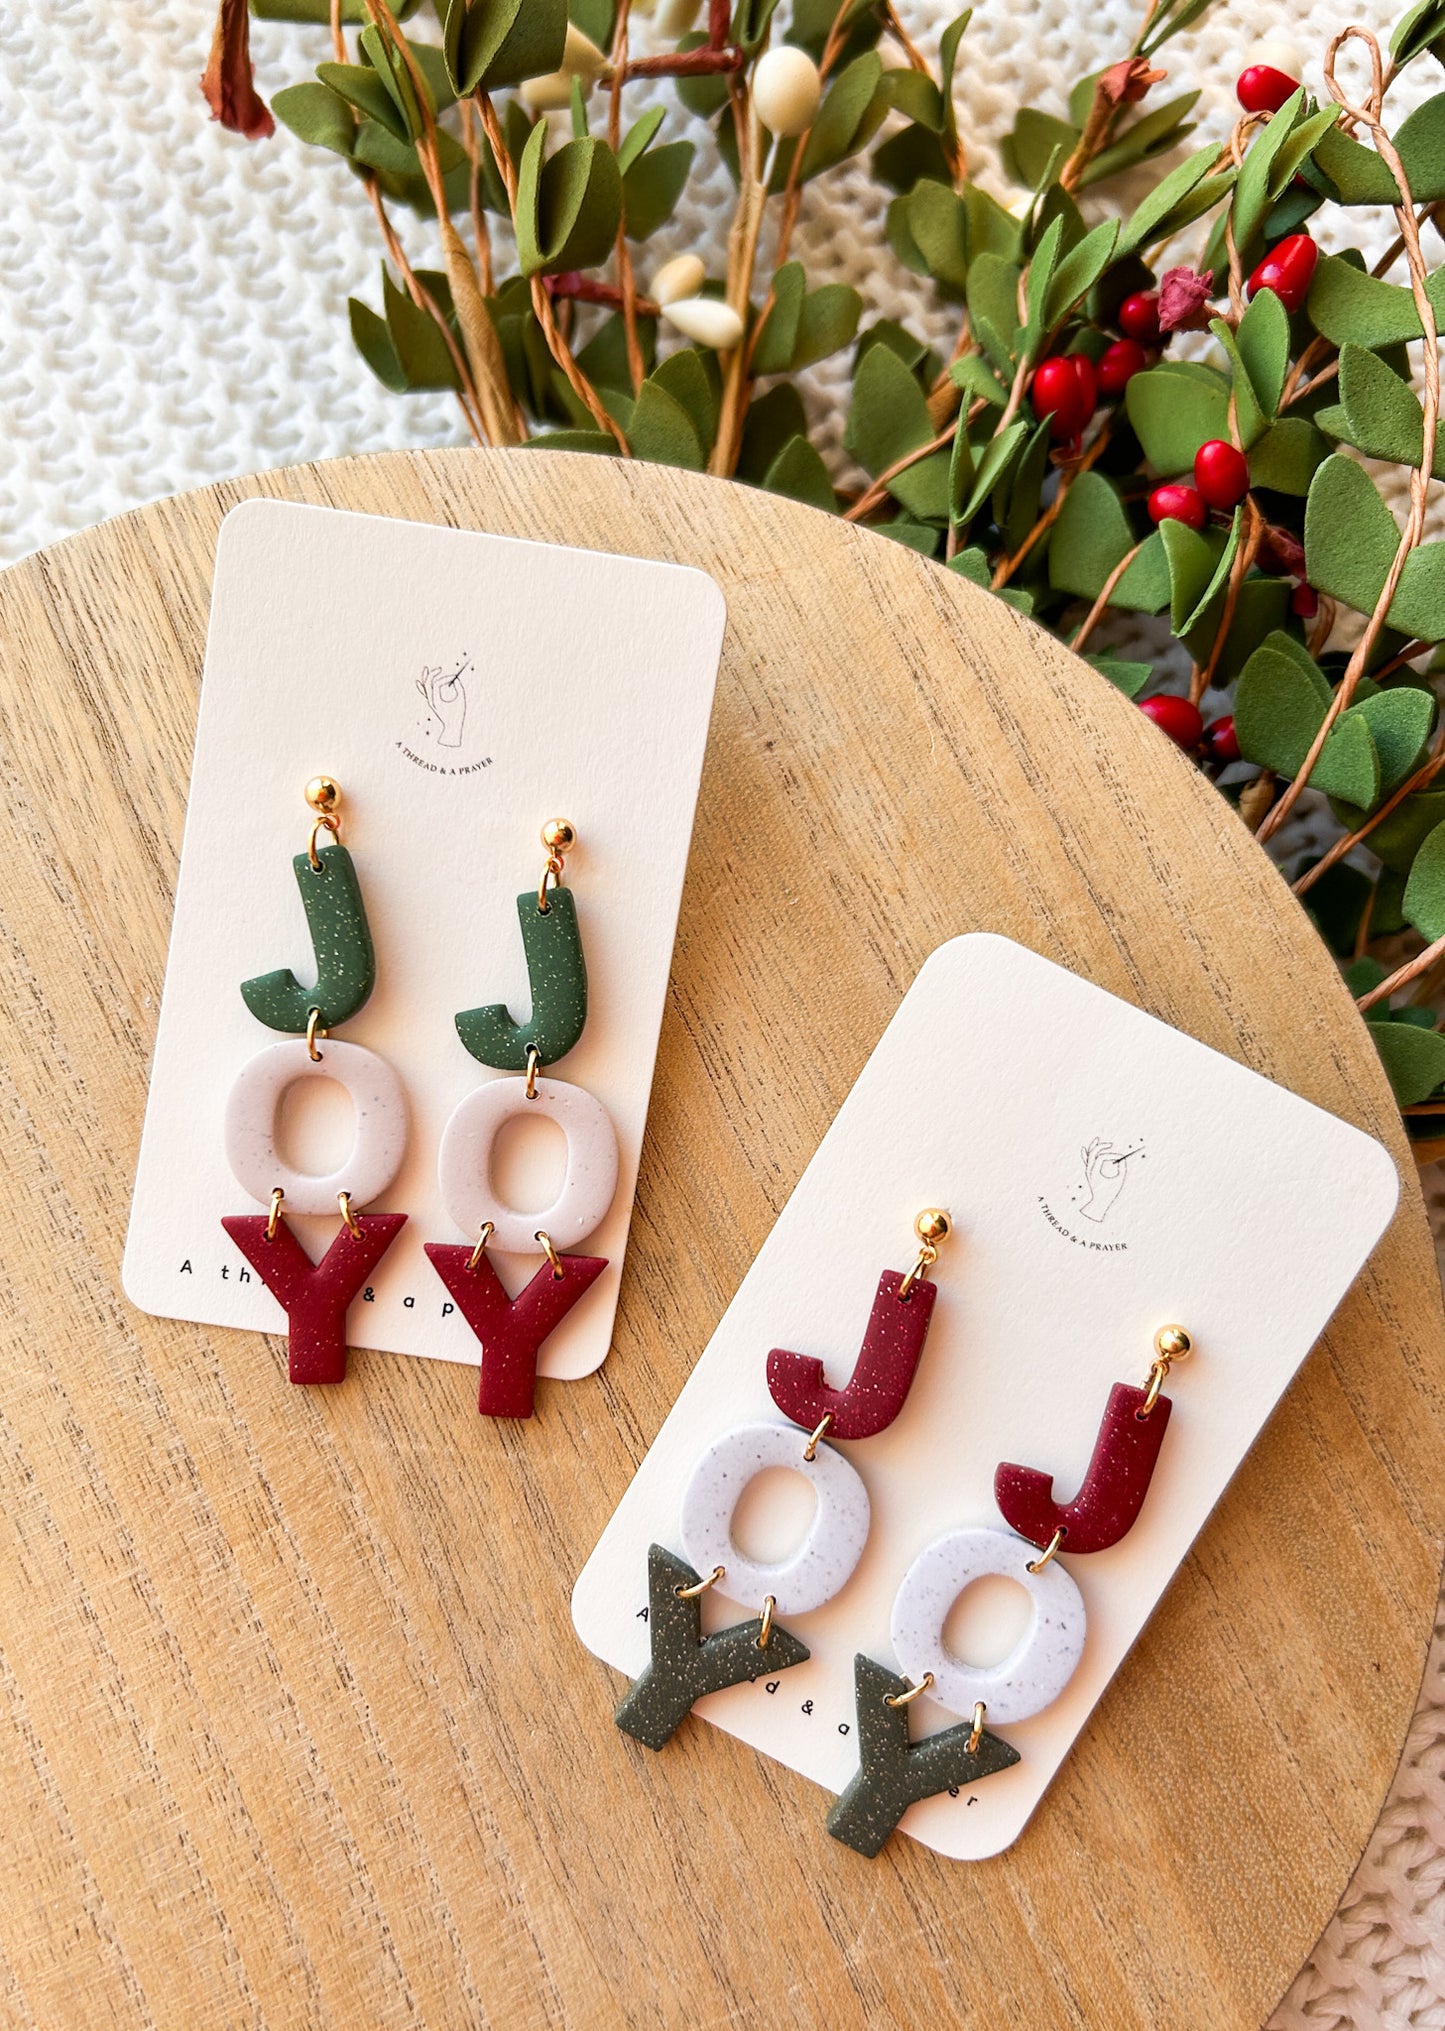 Joy to the World Clay Dangle Earrings | Christmas Earrings | Joyful Earrings | Holiday Colors | Lightweight